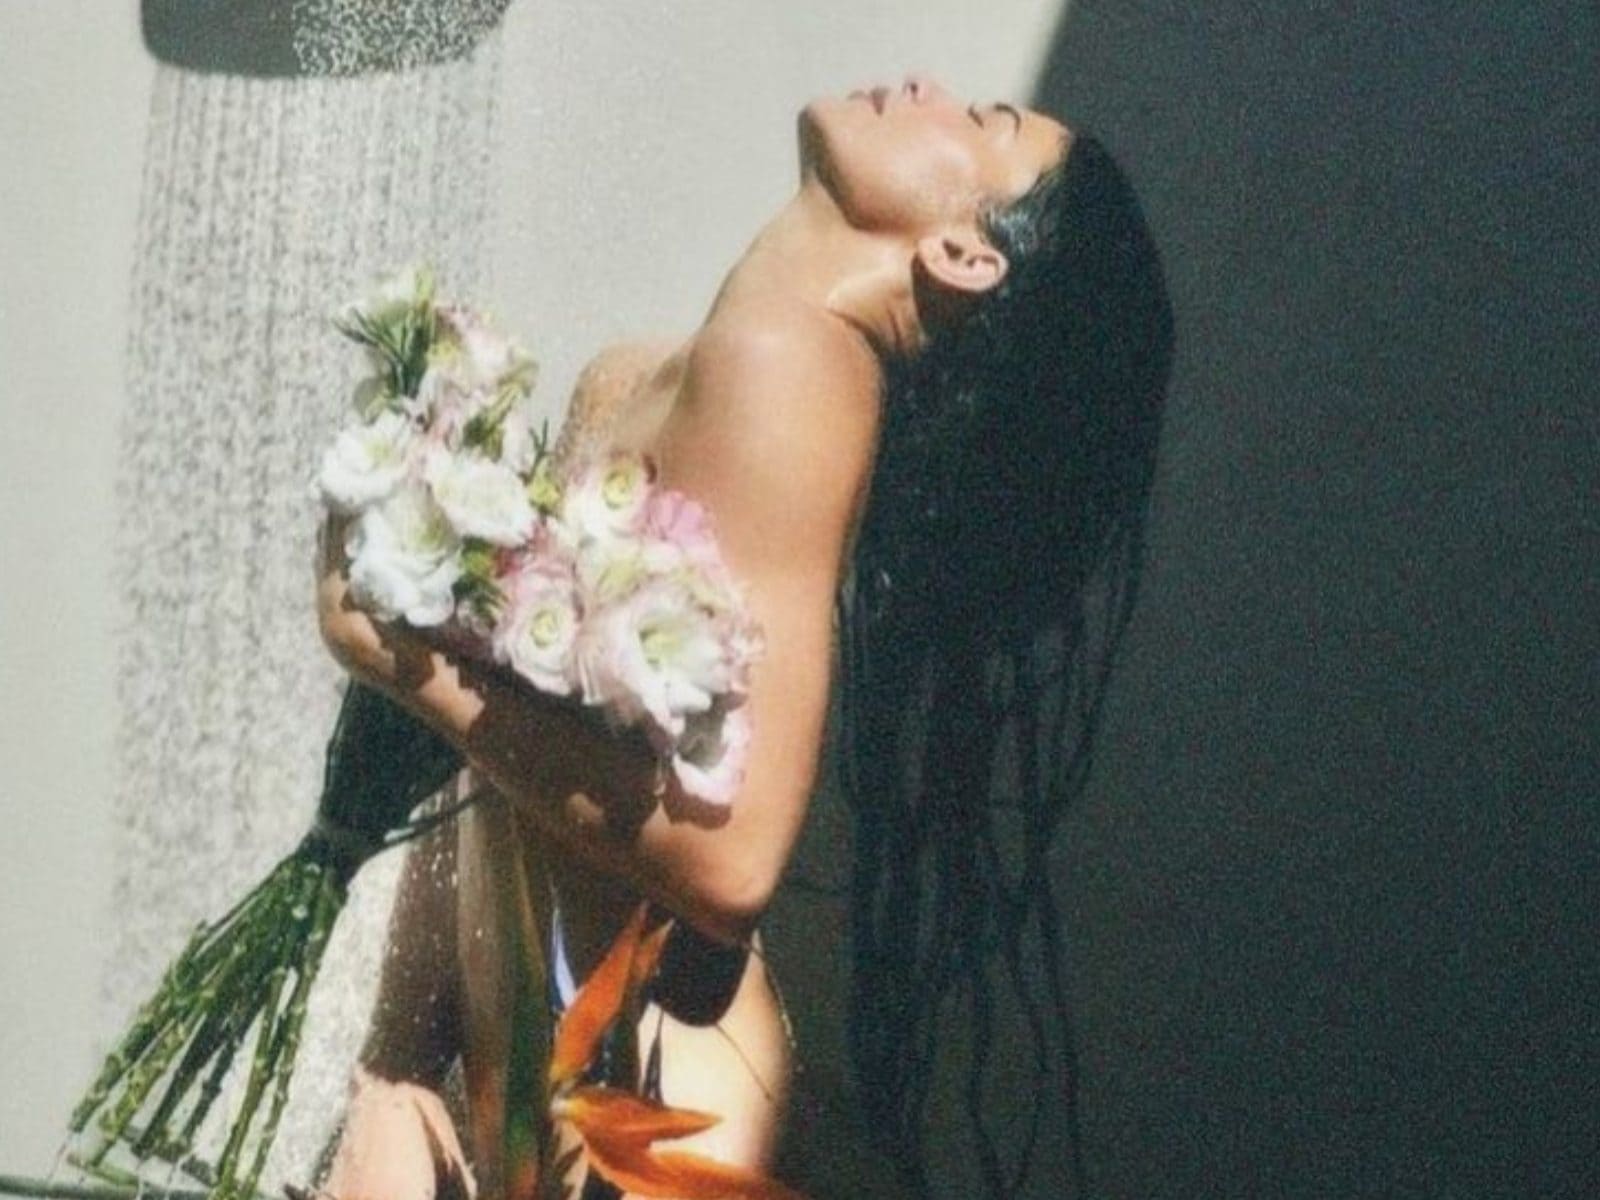 Kylie Jenner turns up the heat in tiny metallic pink bikini: See pics